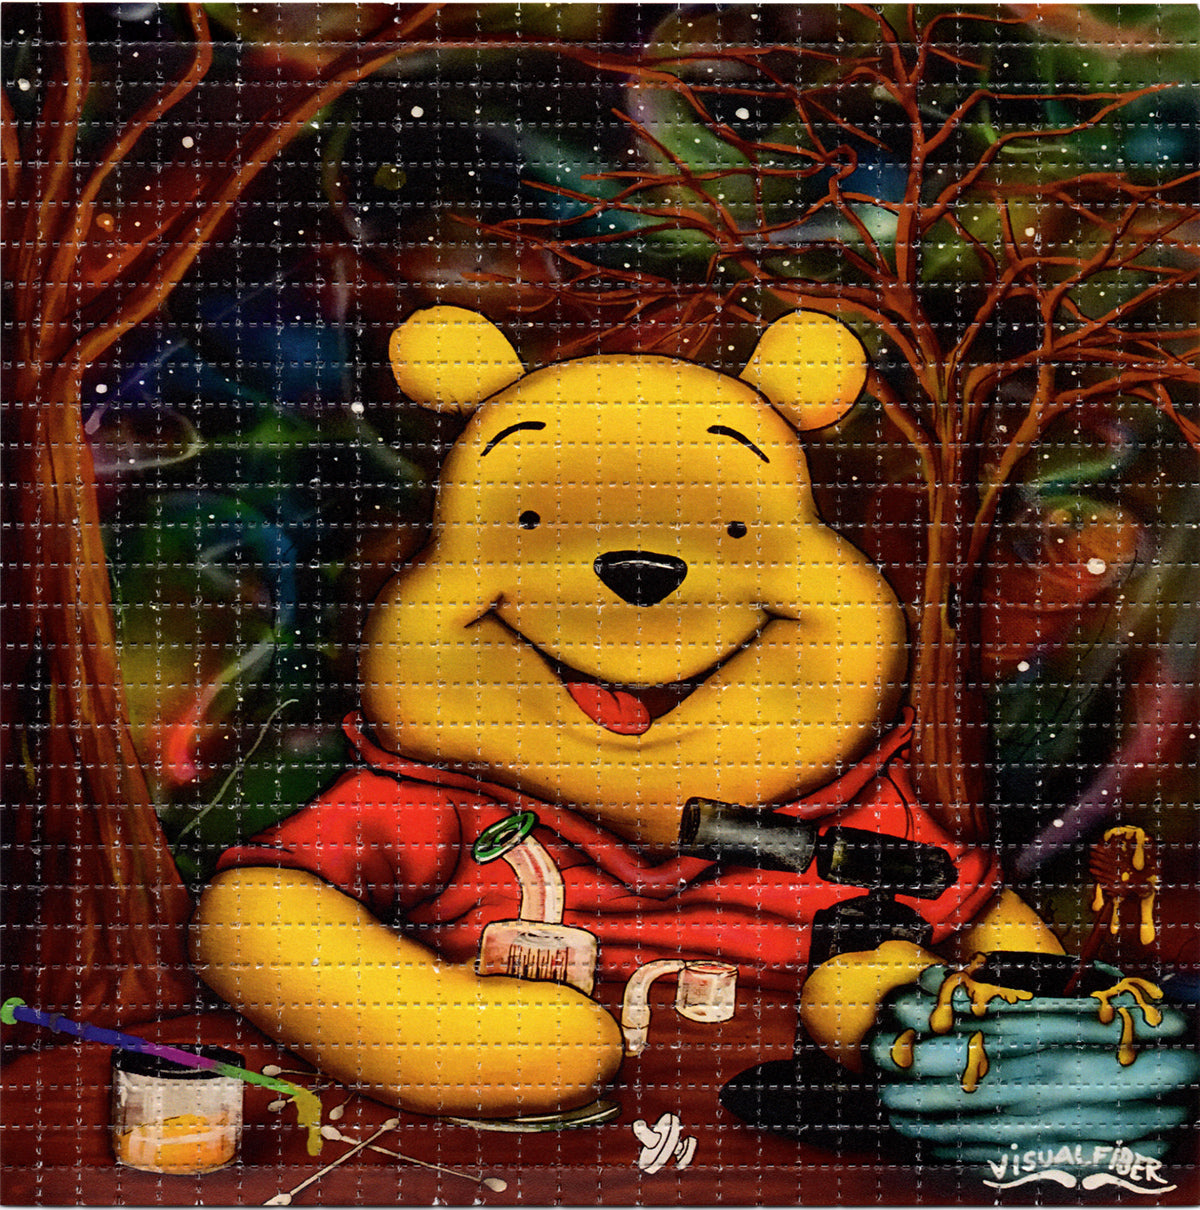 Dabbin Pooh by Visual Fiber Limited Edition LSD blotter art print